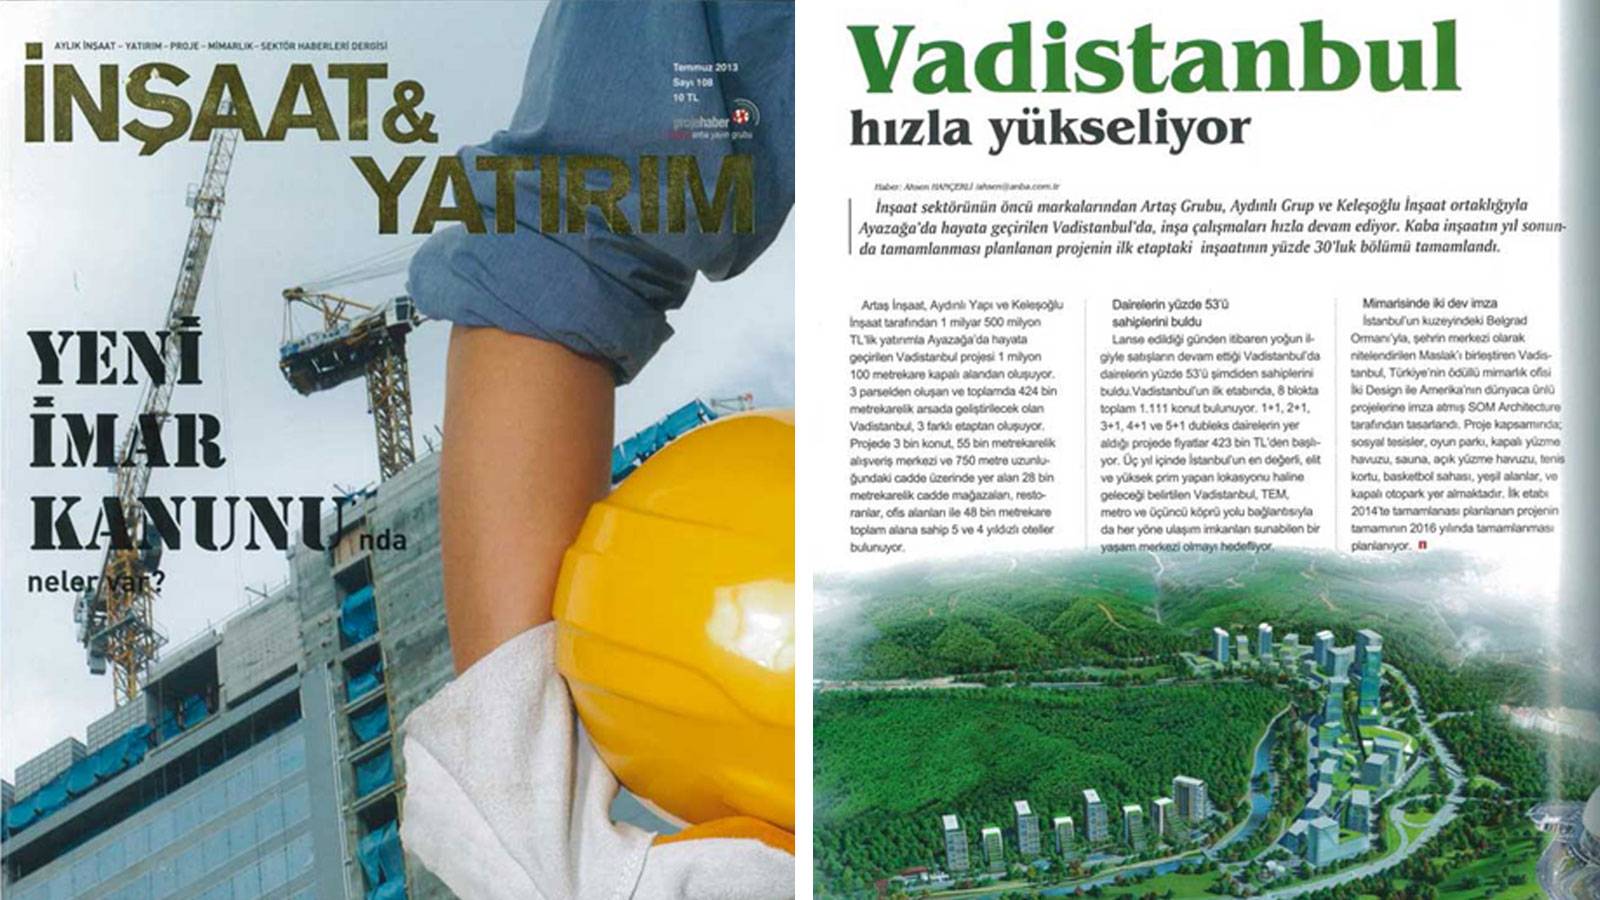 01.07.2013 Vadistanbul has been published in İnşaat & Yatırım Magazine